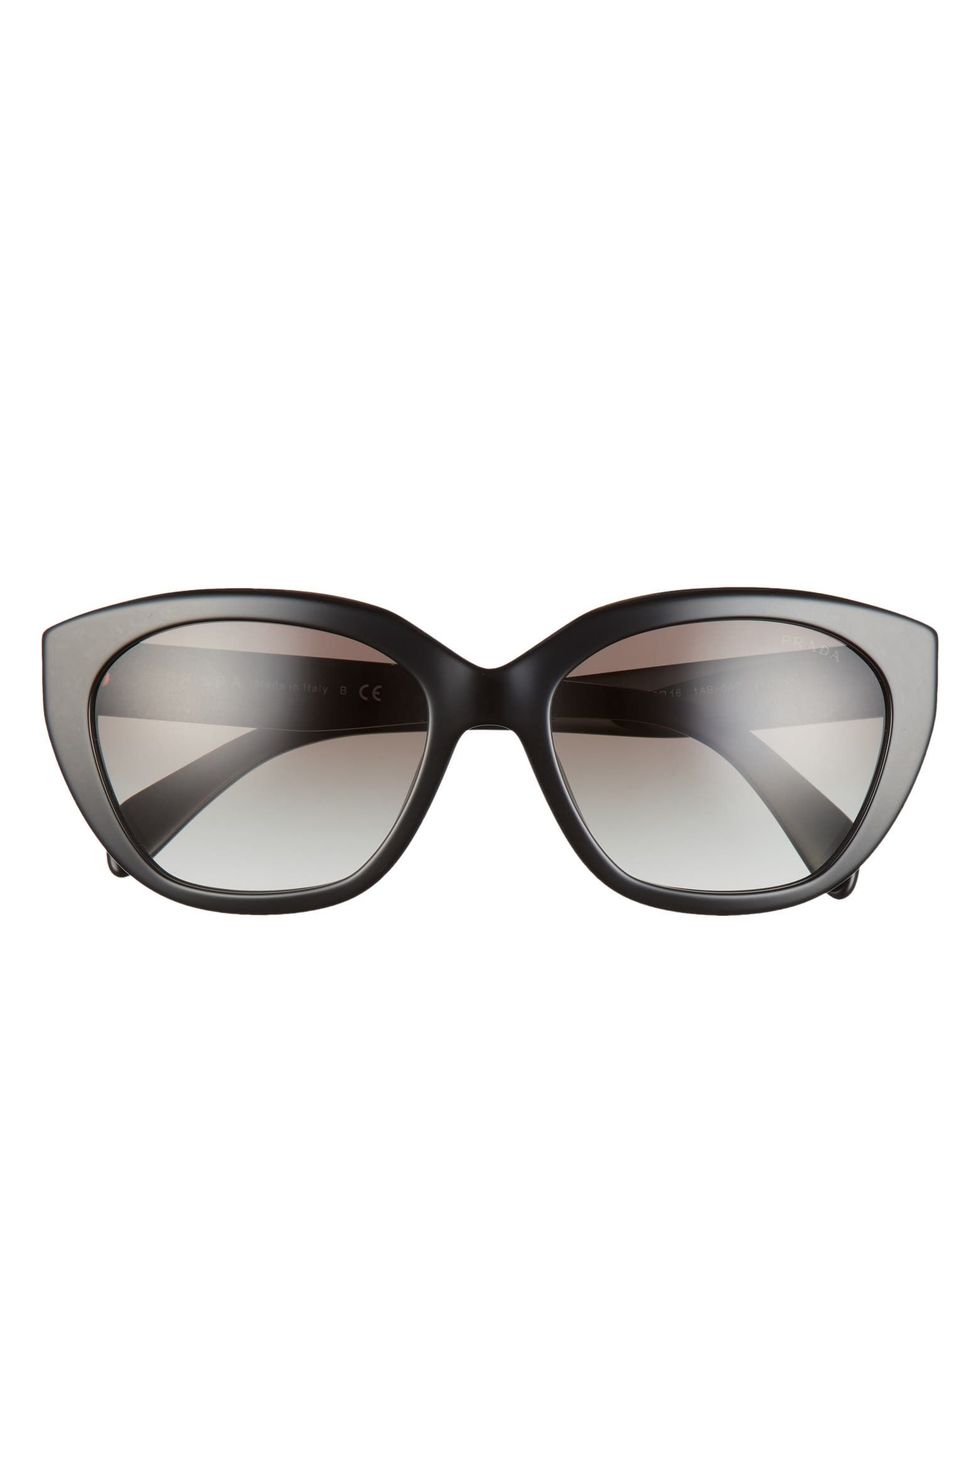 Prada 56mm Gradient Cat Eye Sunglasses 